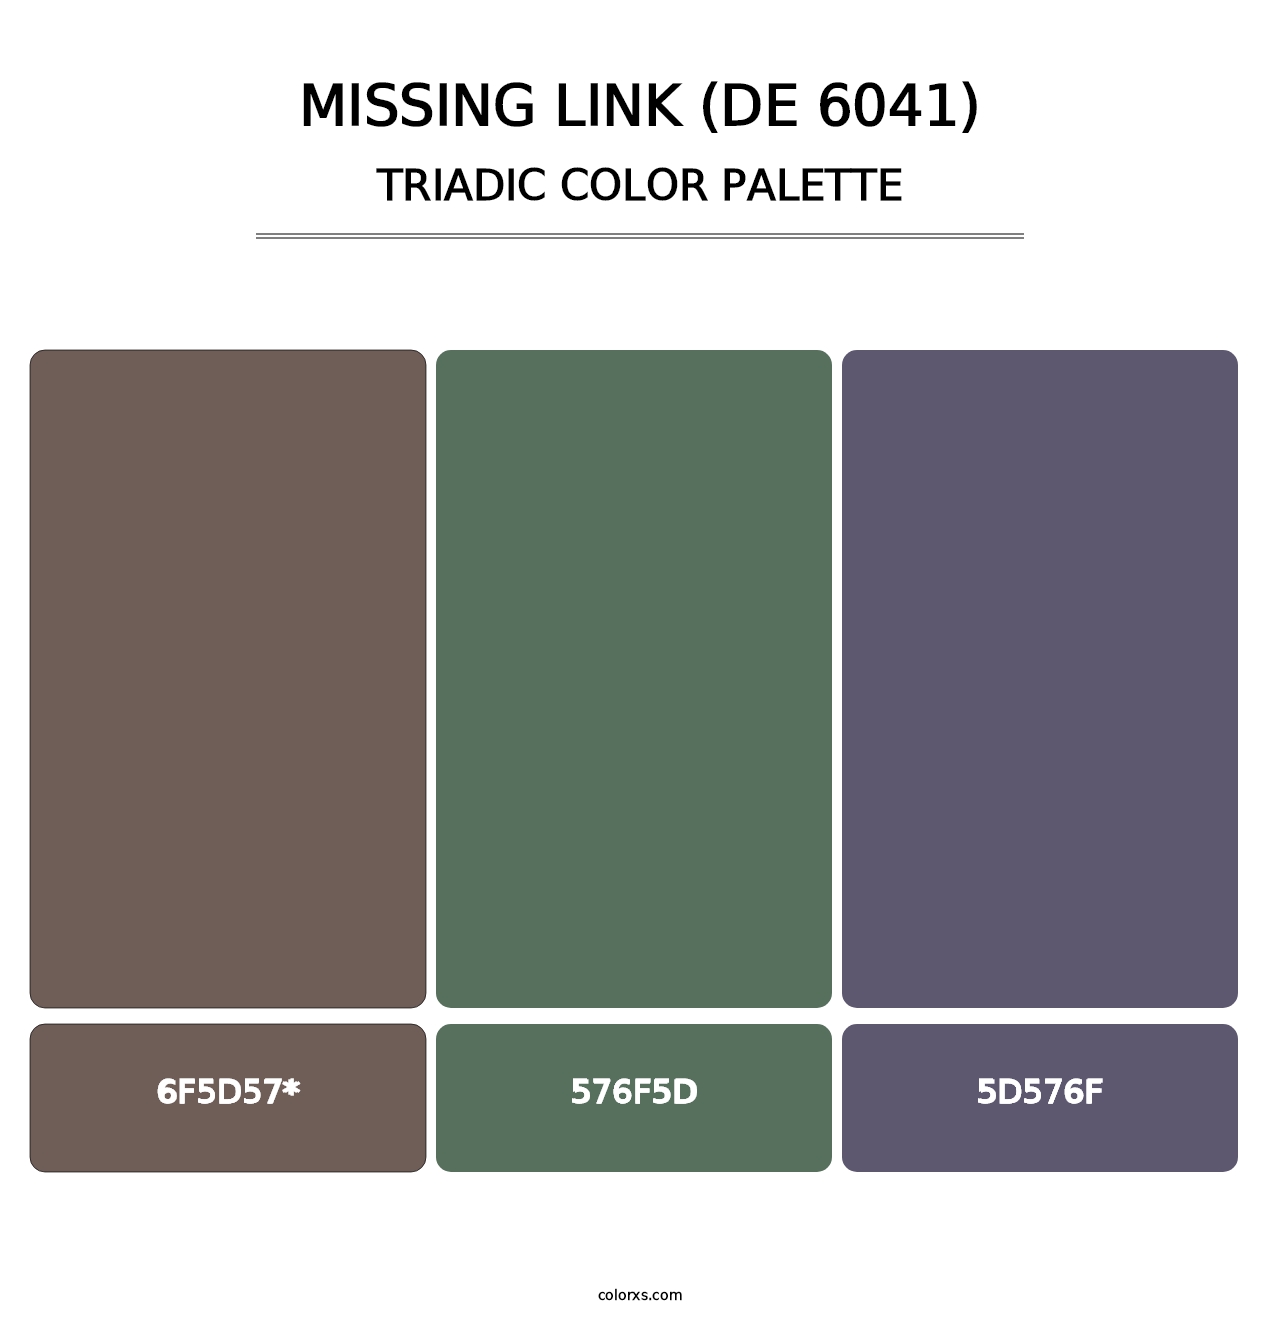 Missing Link (DE 6041) - Triadic Color Palette